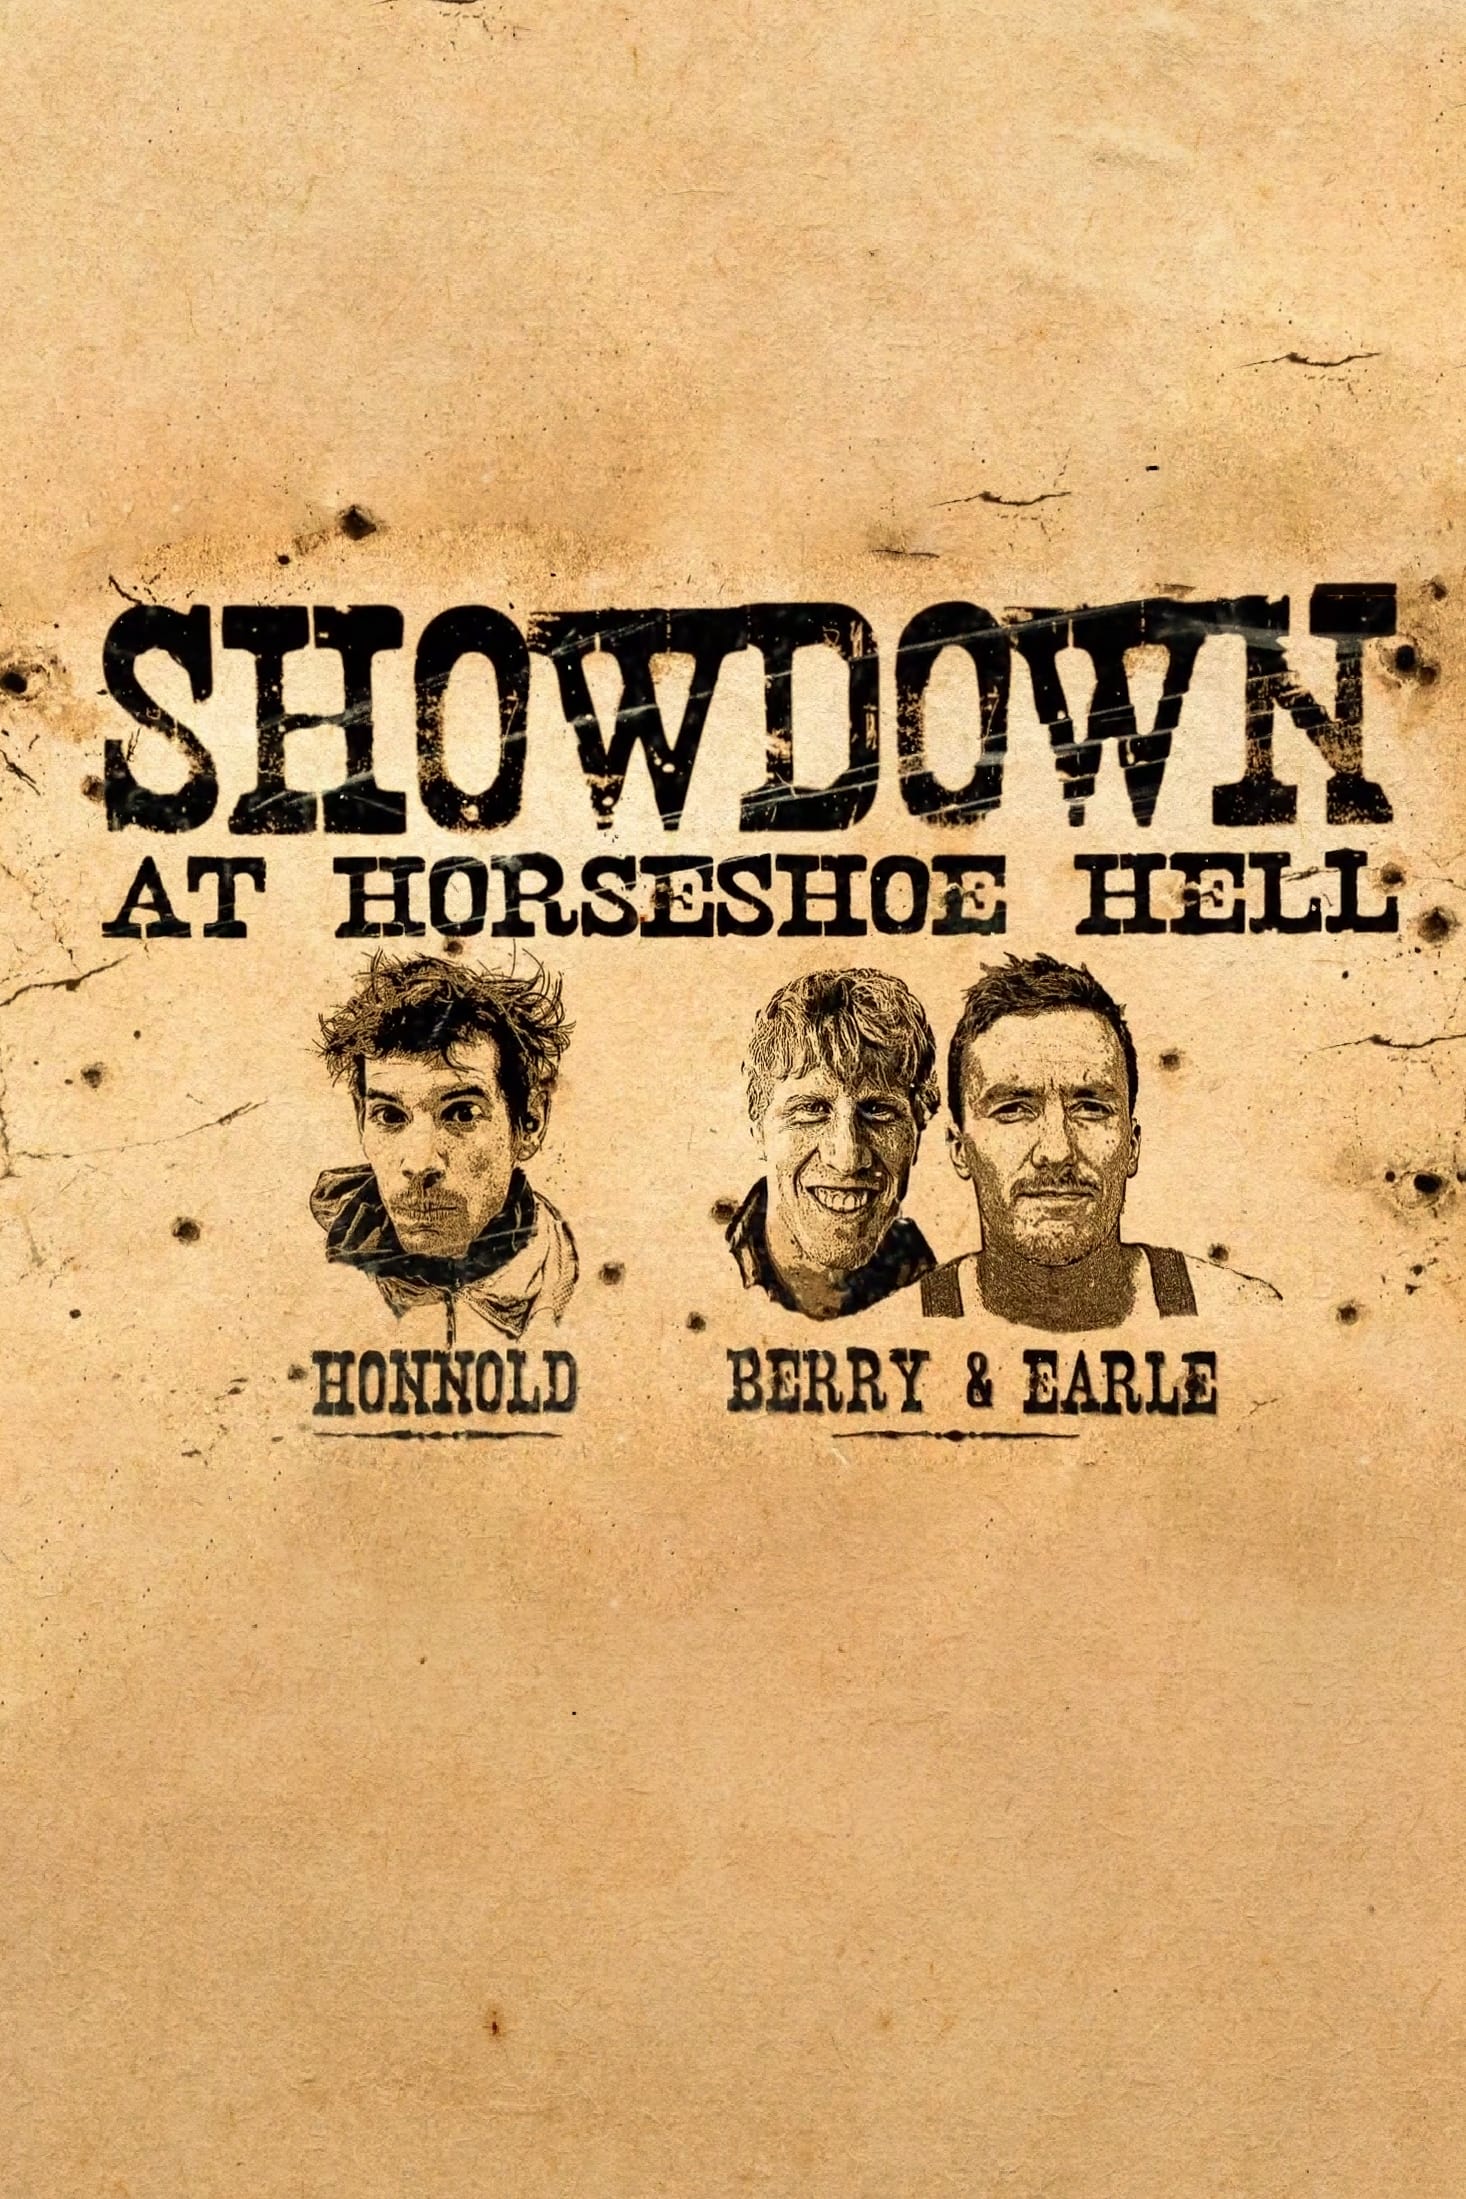 Showdown at Horseshoe Hell